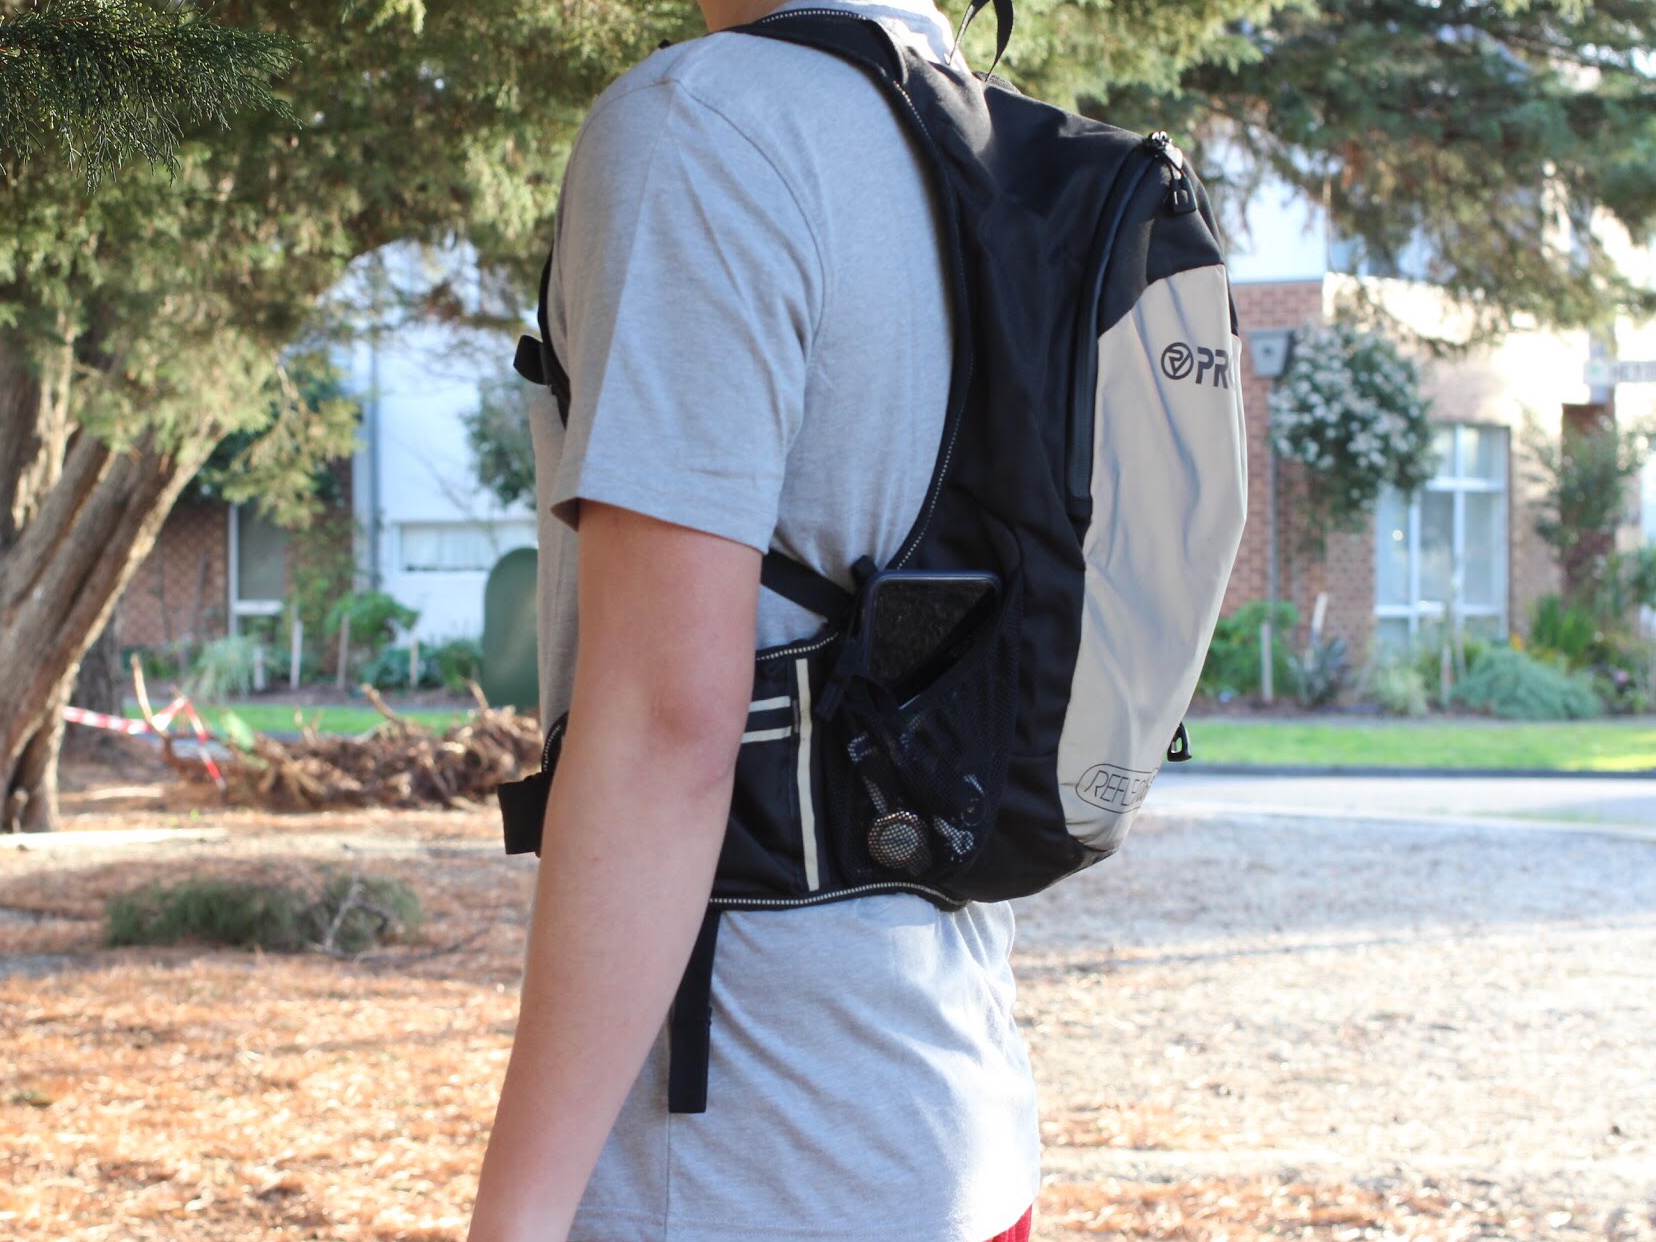 proviz reflect360 running backpack